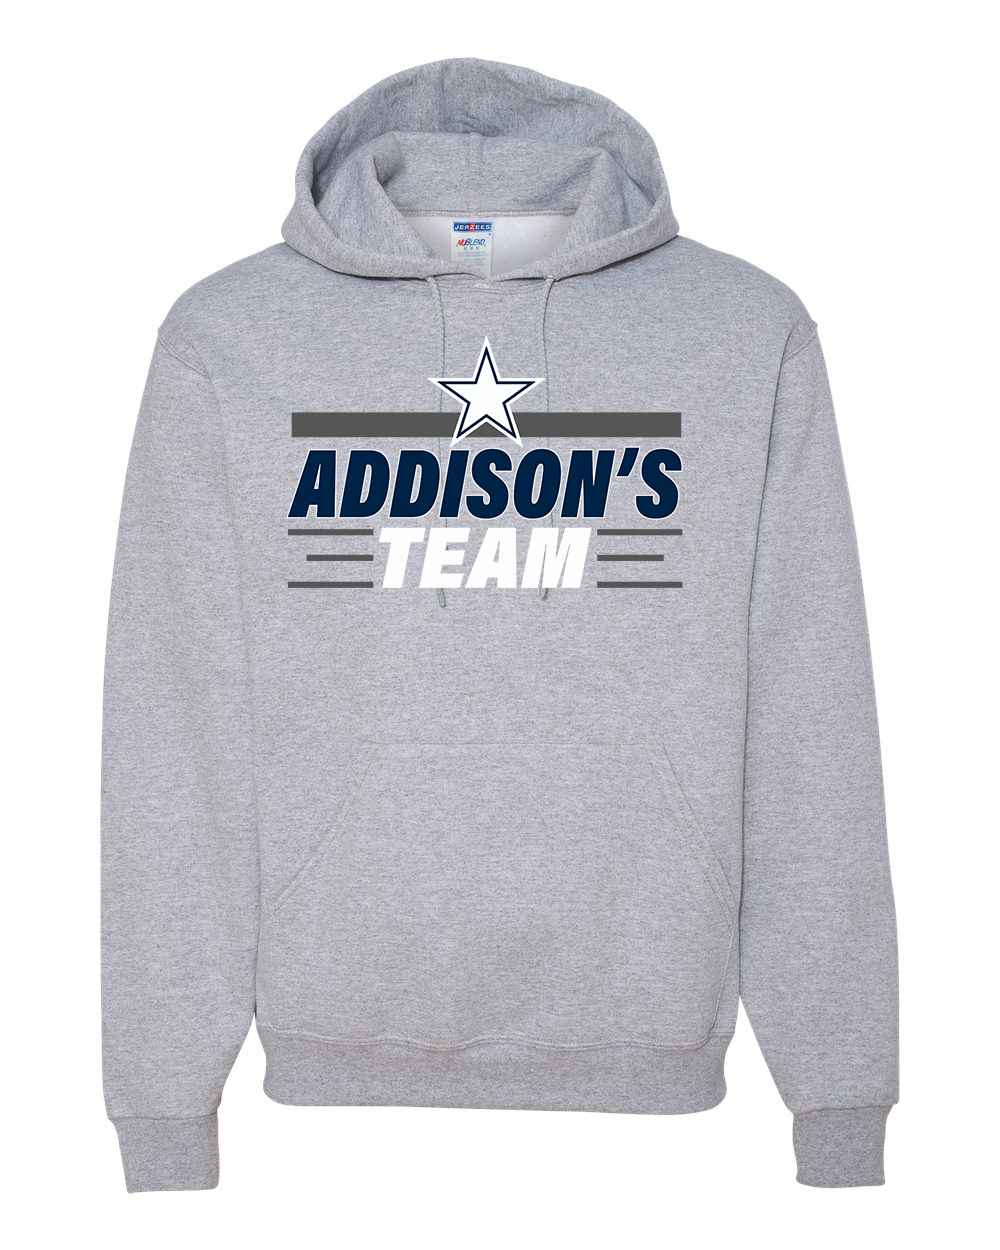 Addison's Team -  Hooded Sweatshirt - YOUTH